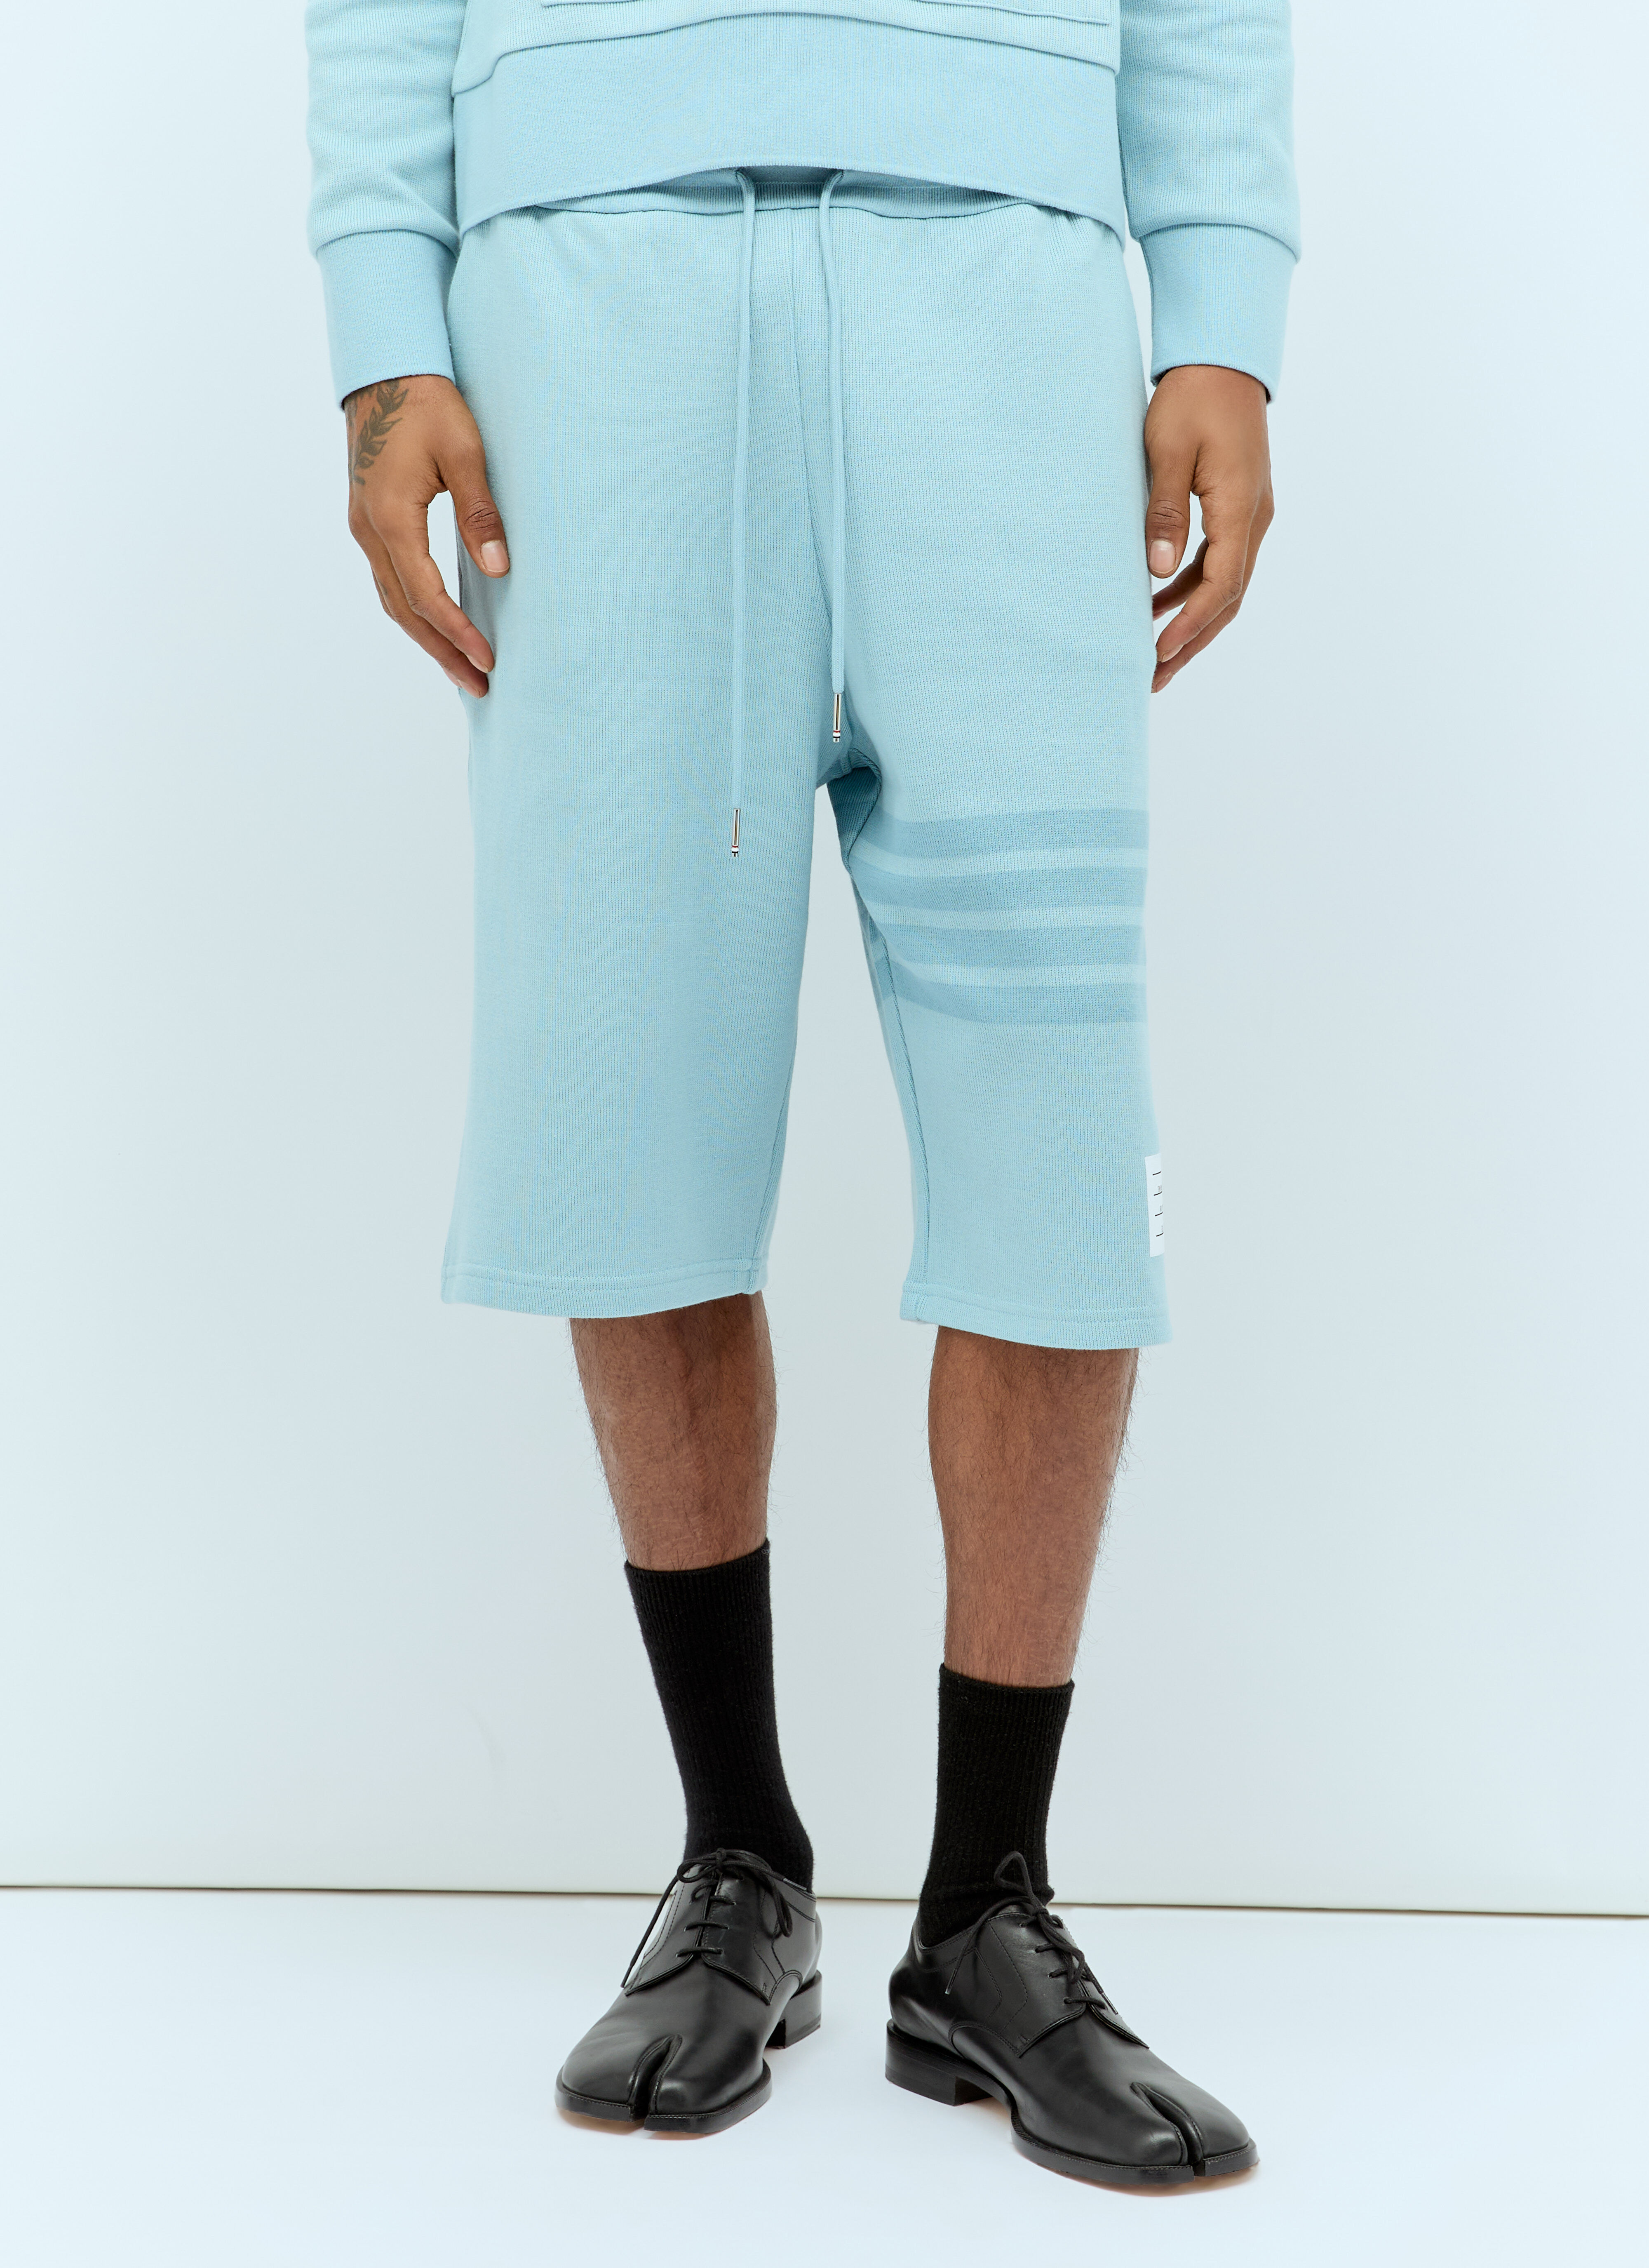 Boiler Room Knit Track Shorts Grey bor0156003